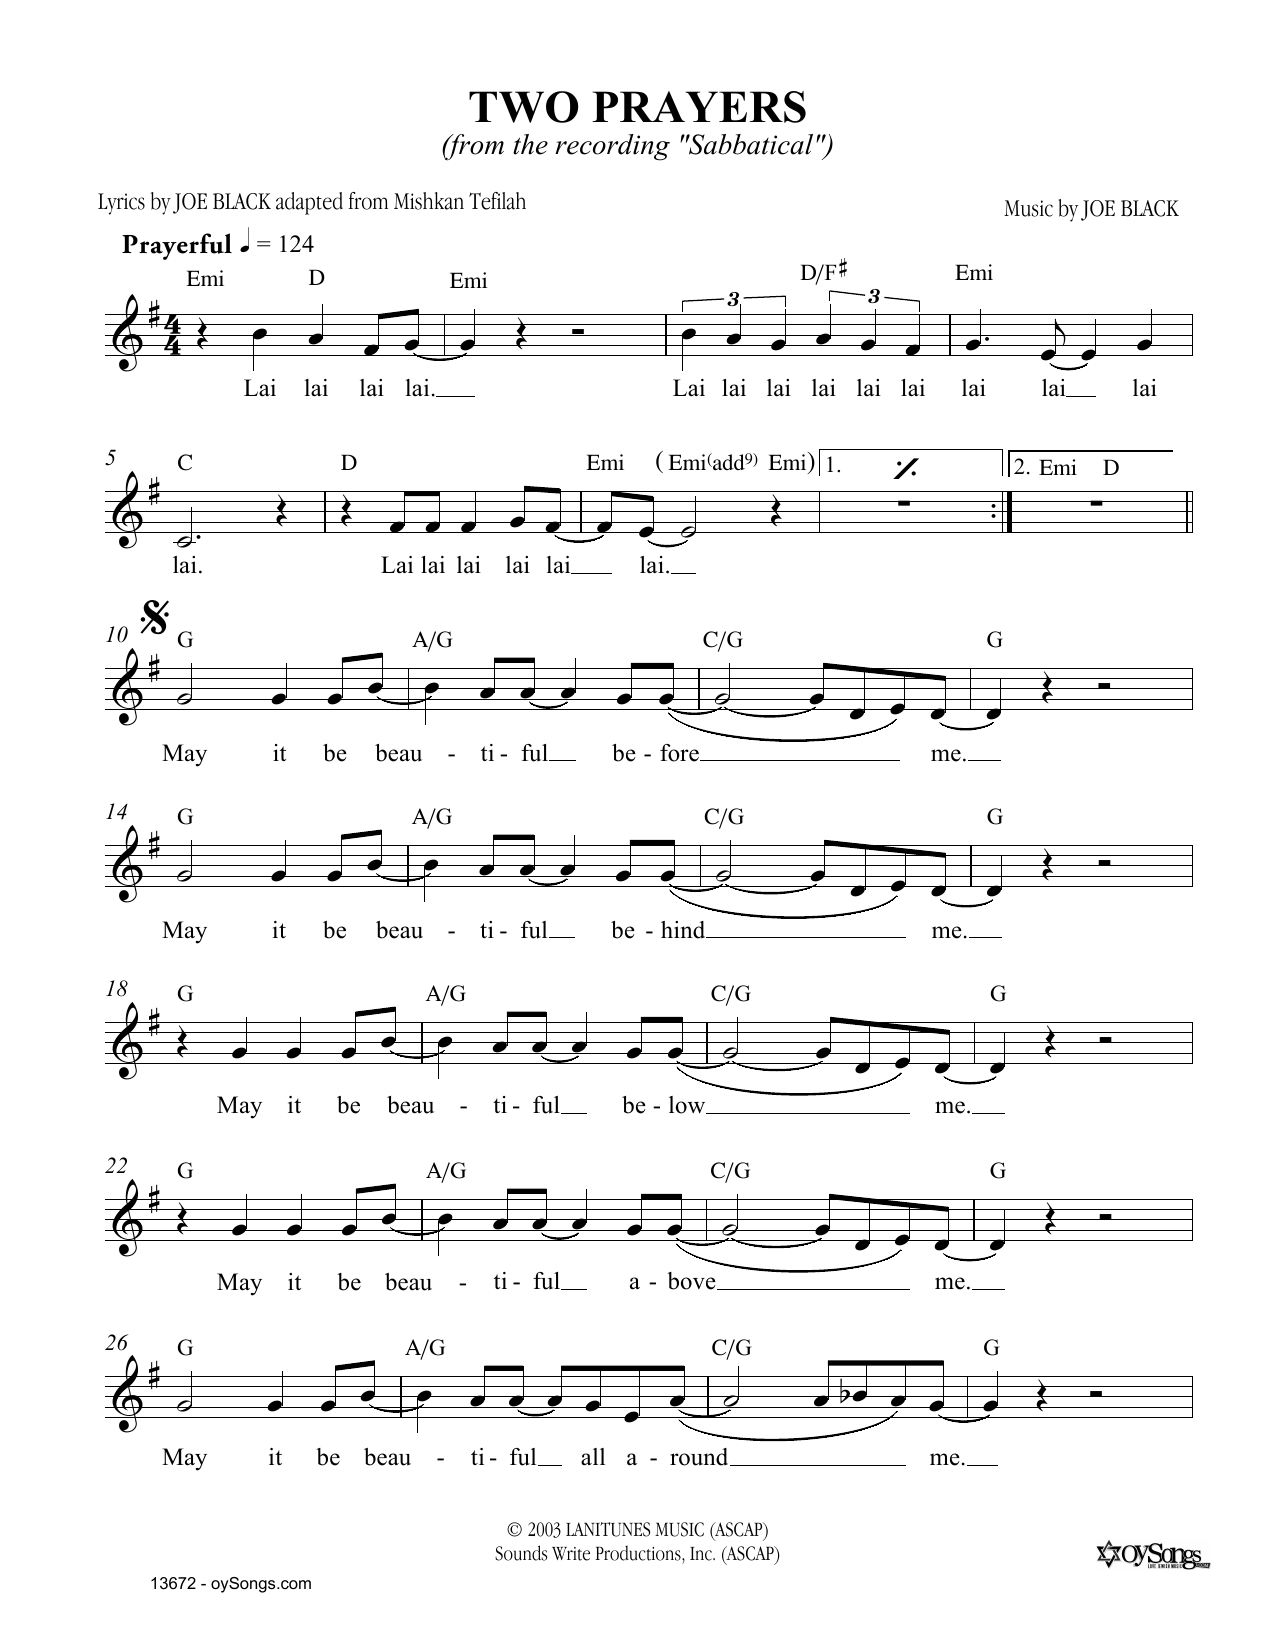 Joe Black Two Prayers Sheet Music Notes & Chords for Melody Line, Lyrics & Chords - Download or Print PDF